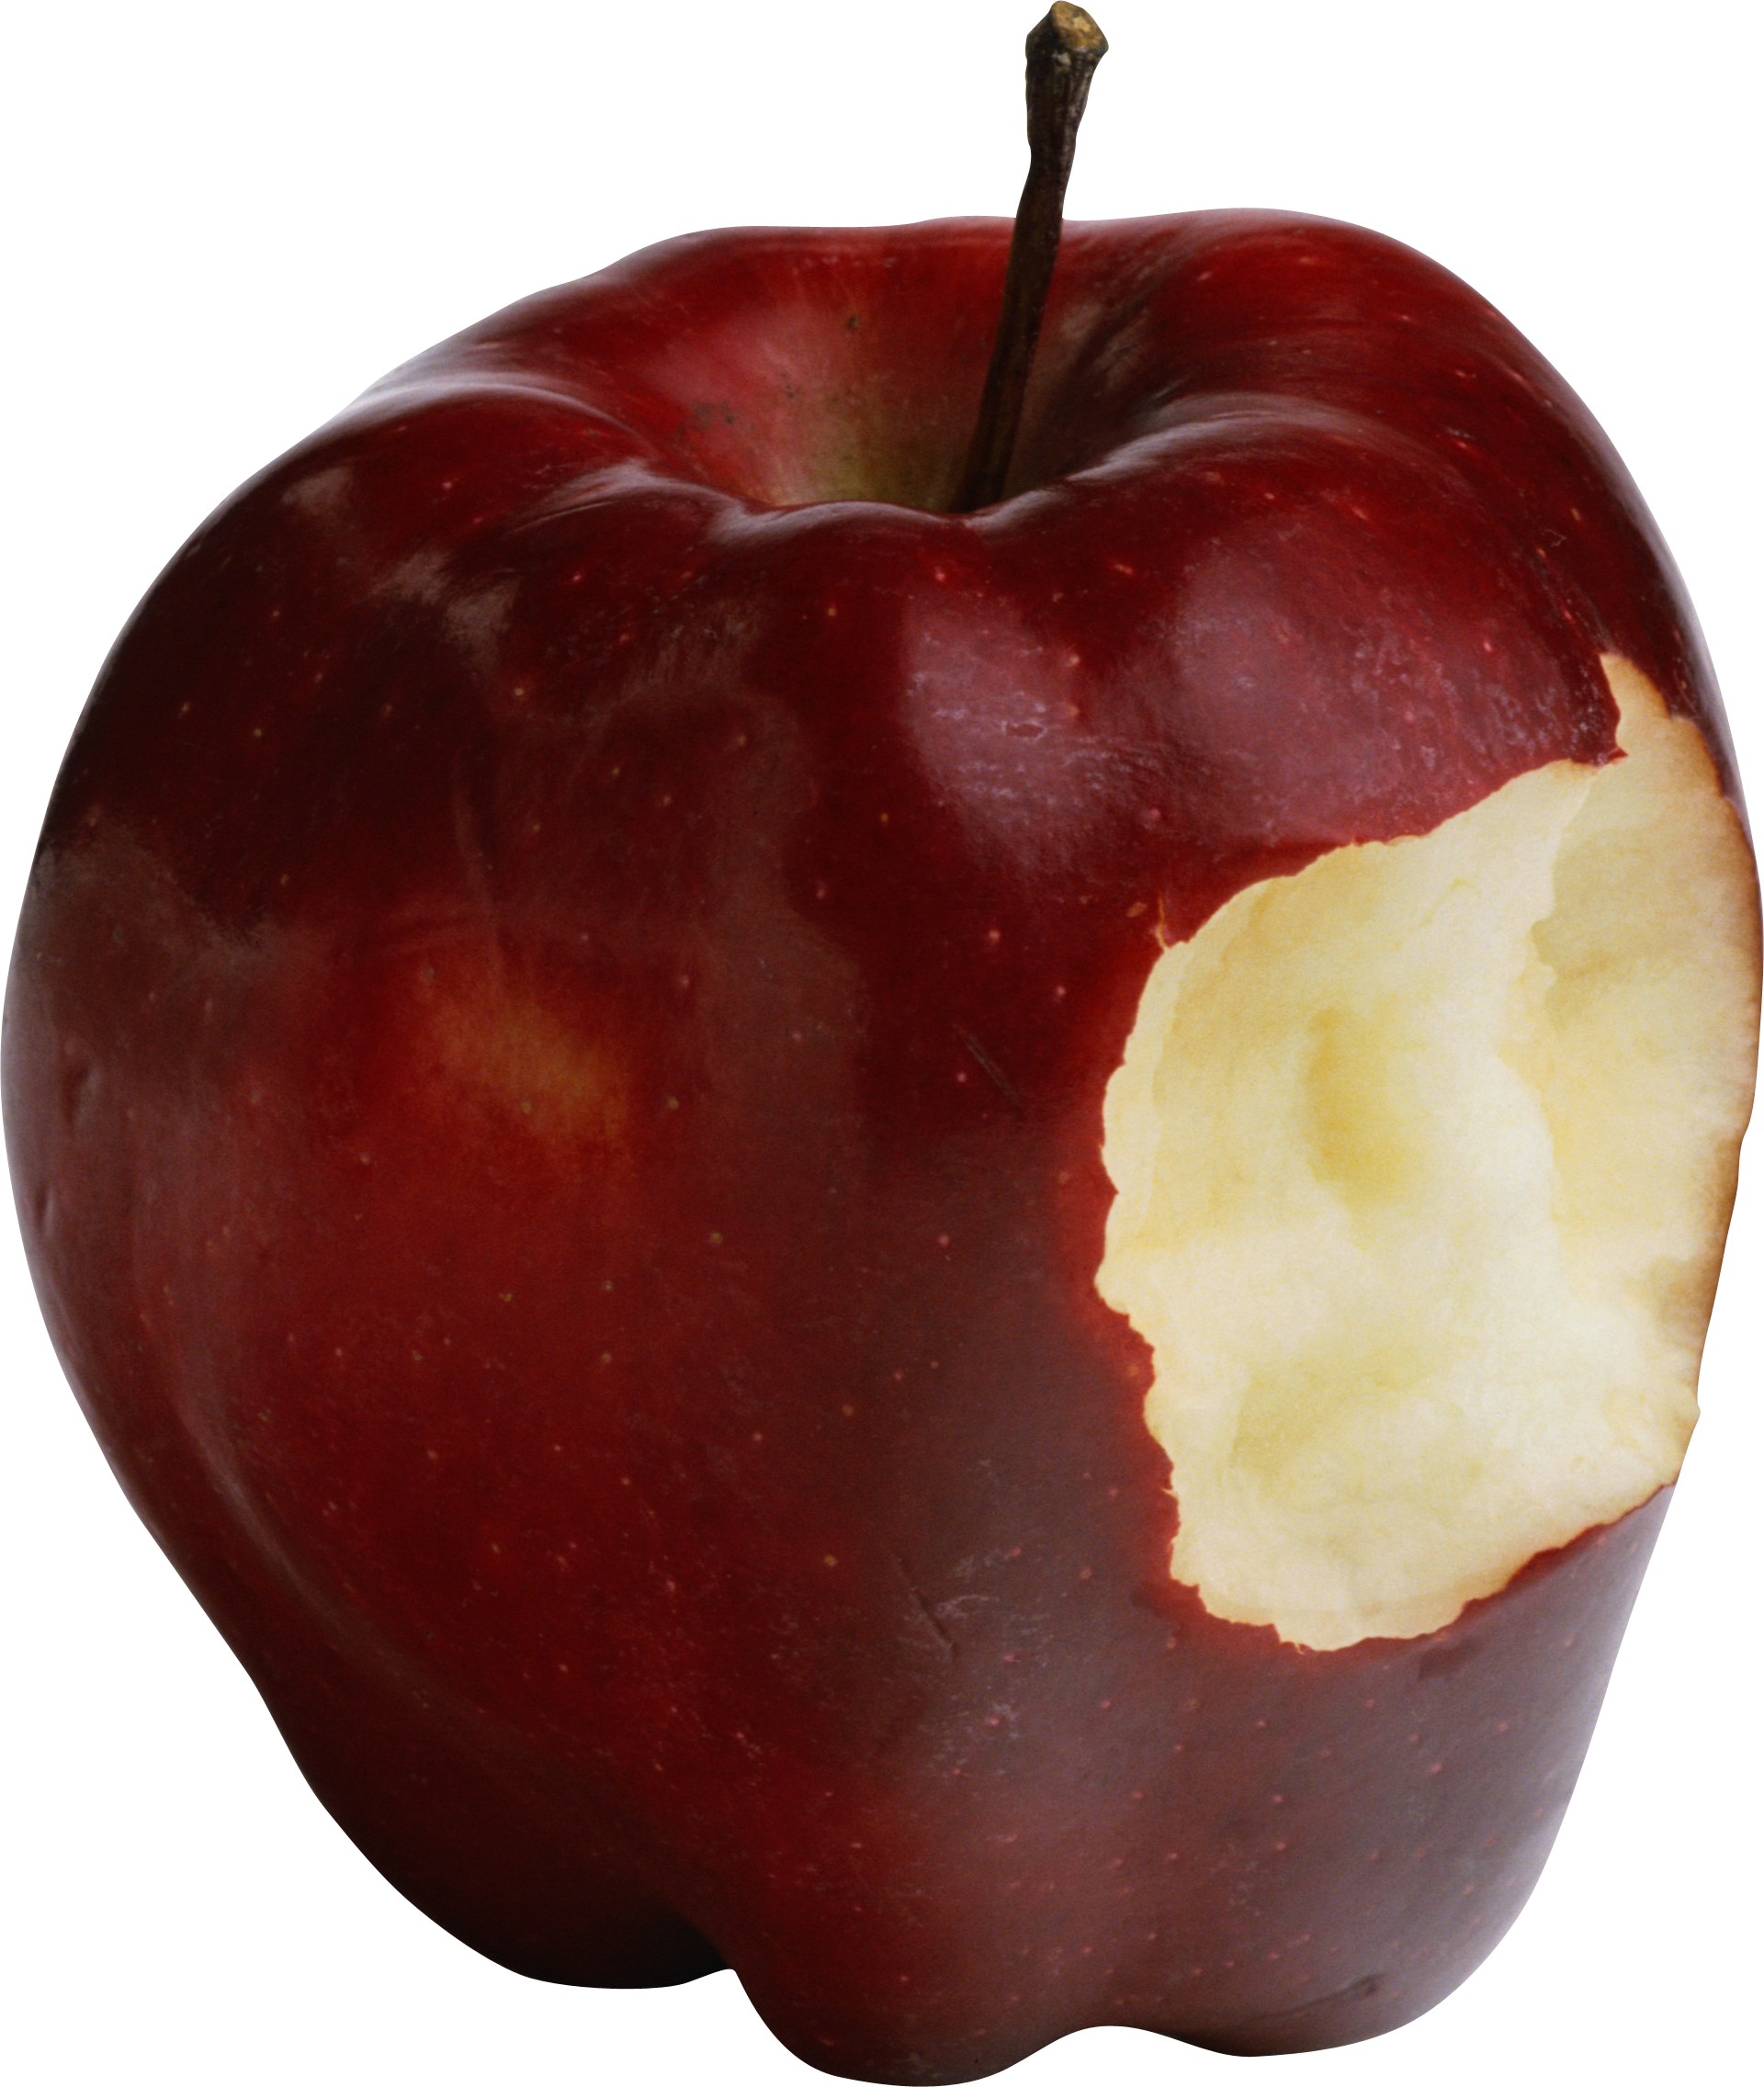 Red Apple Nine - Bitten Apple Transparent Background (1920x2272)